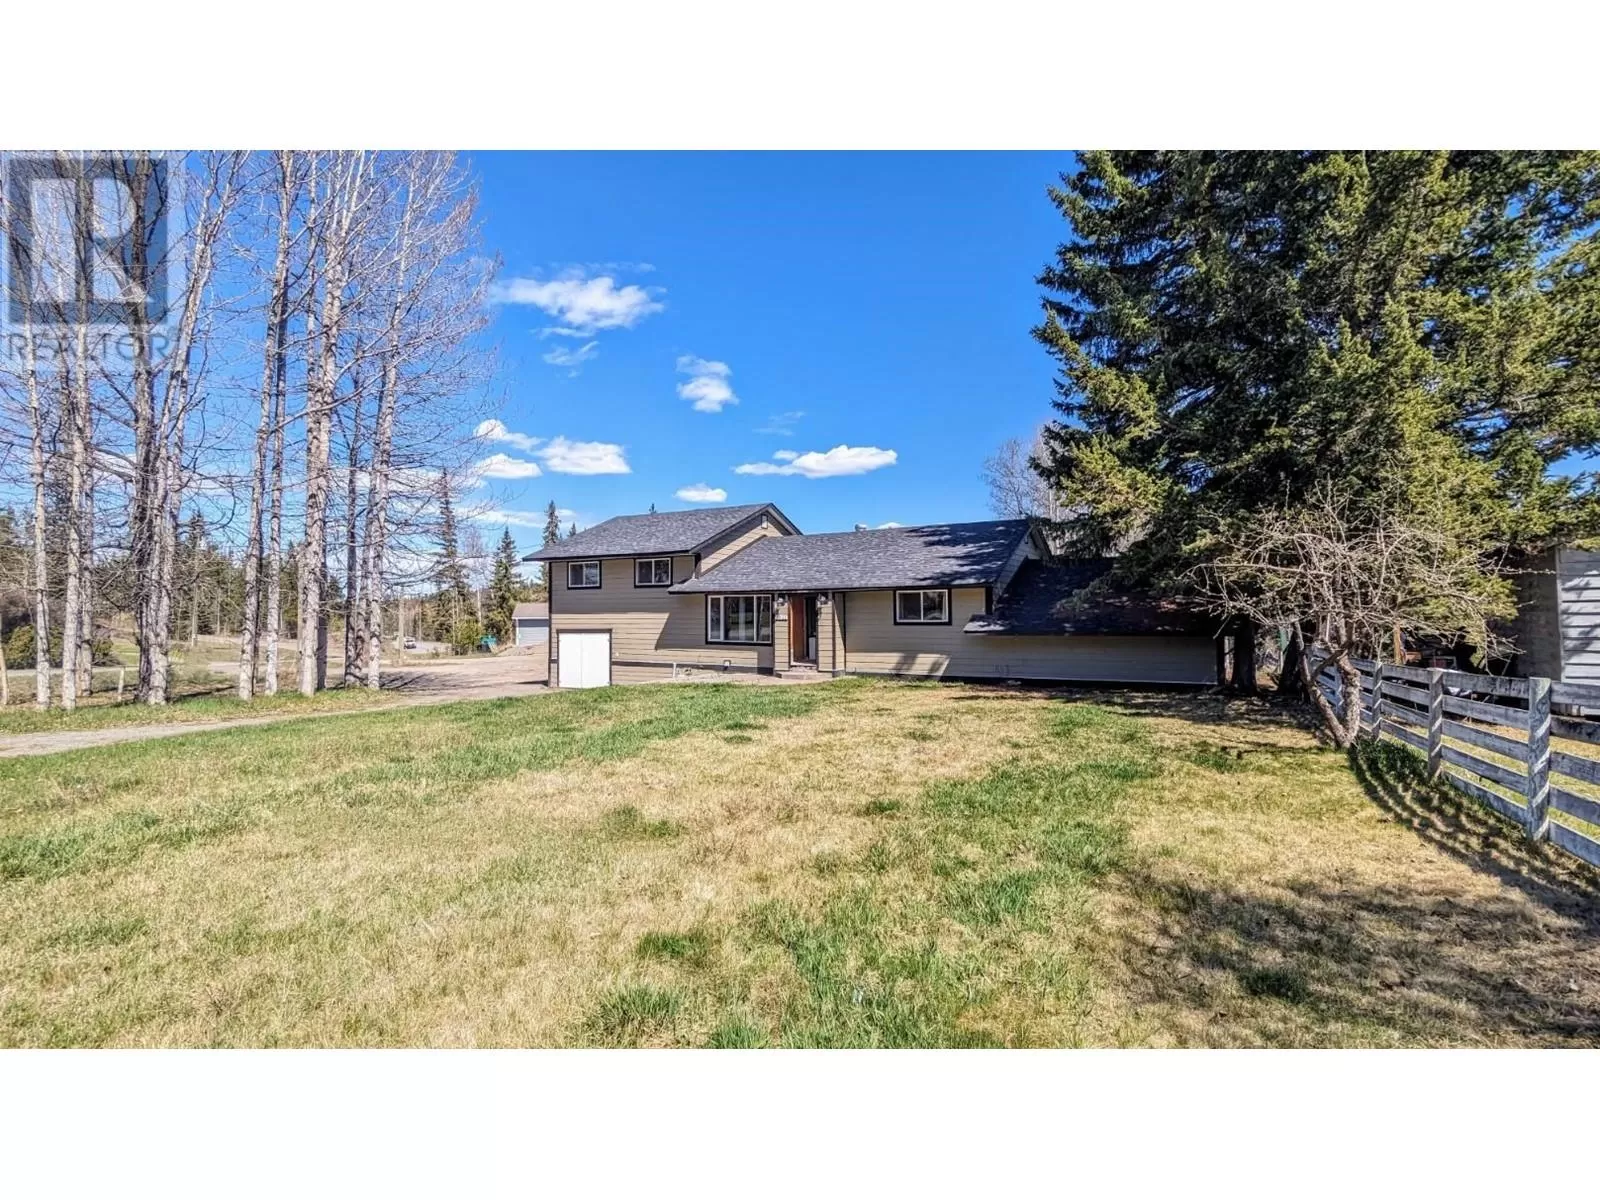 House for rent: 5611 Canim-hendrix Lake Road, 100 Mile House, British Columbia V0K 1M0